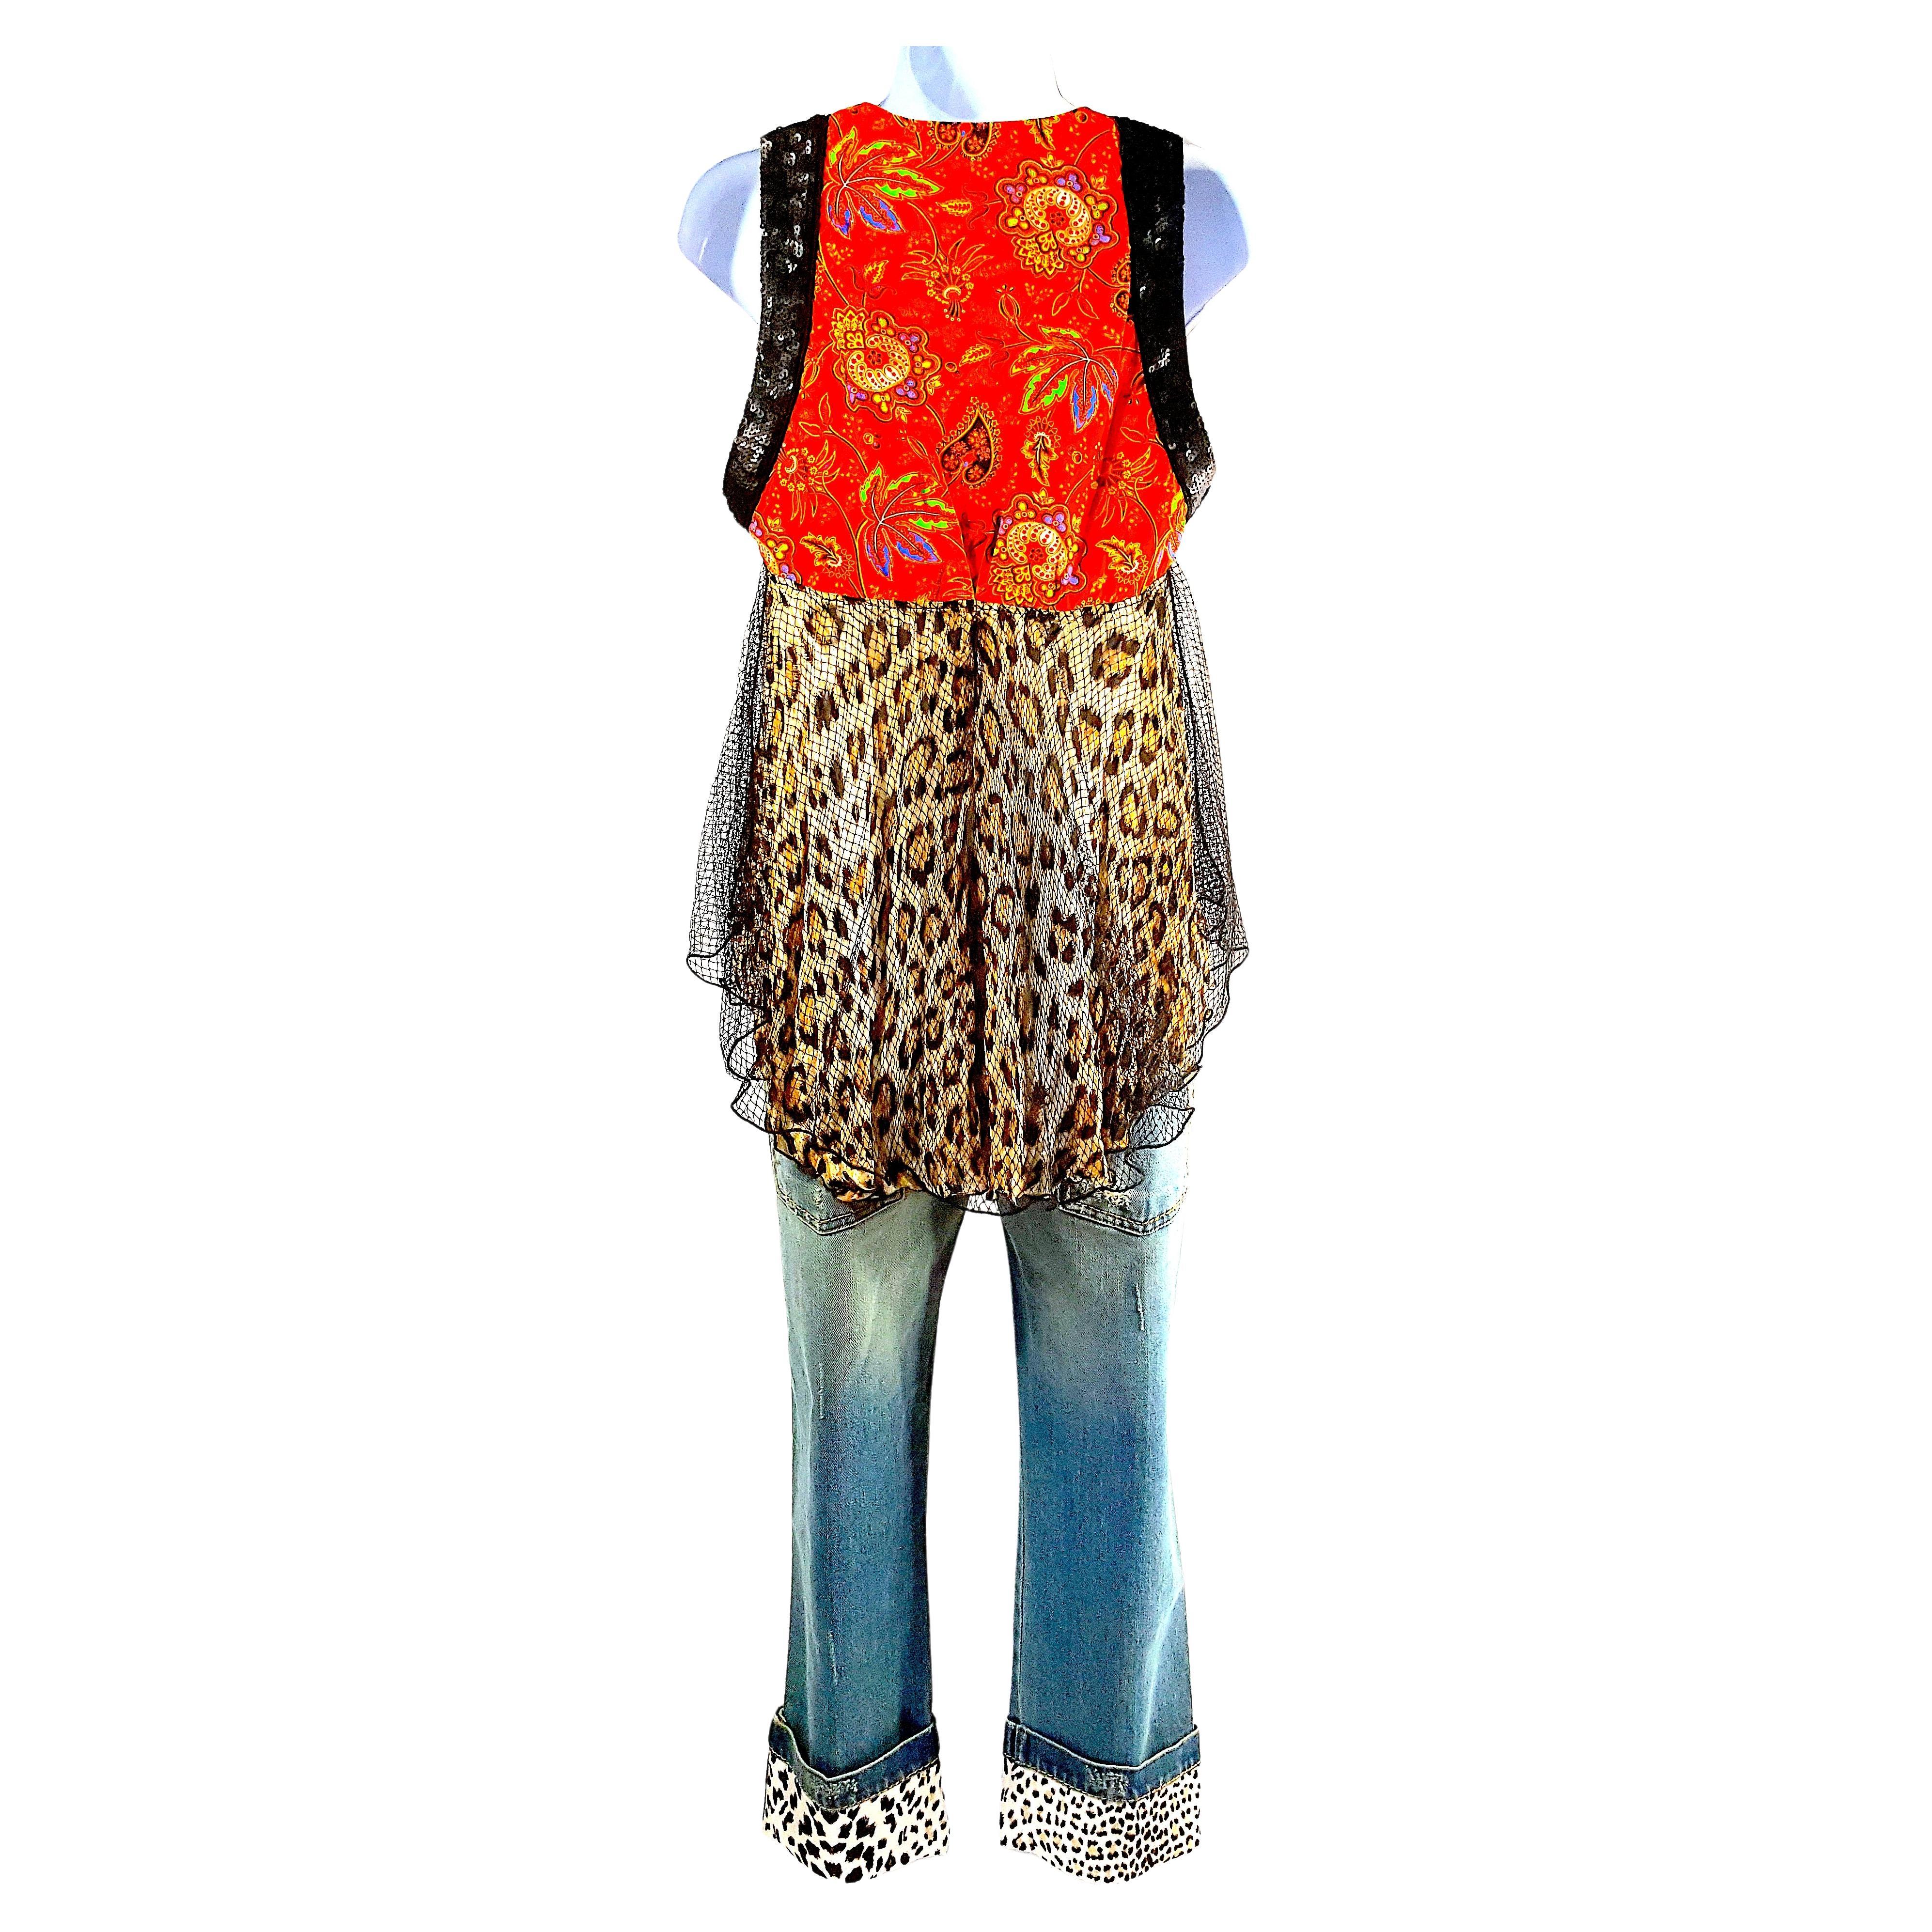 Women's Cavalli S/S 2003 Embellished SilkLeopard Set SequinsNetBlouse & CuffedCapriJeans For Sale